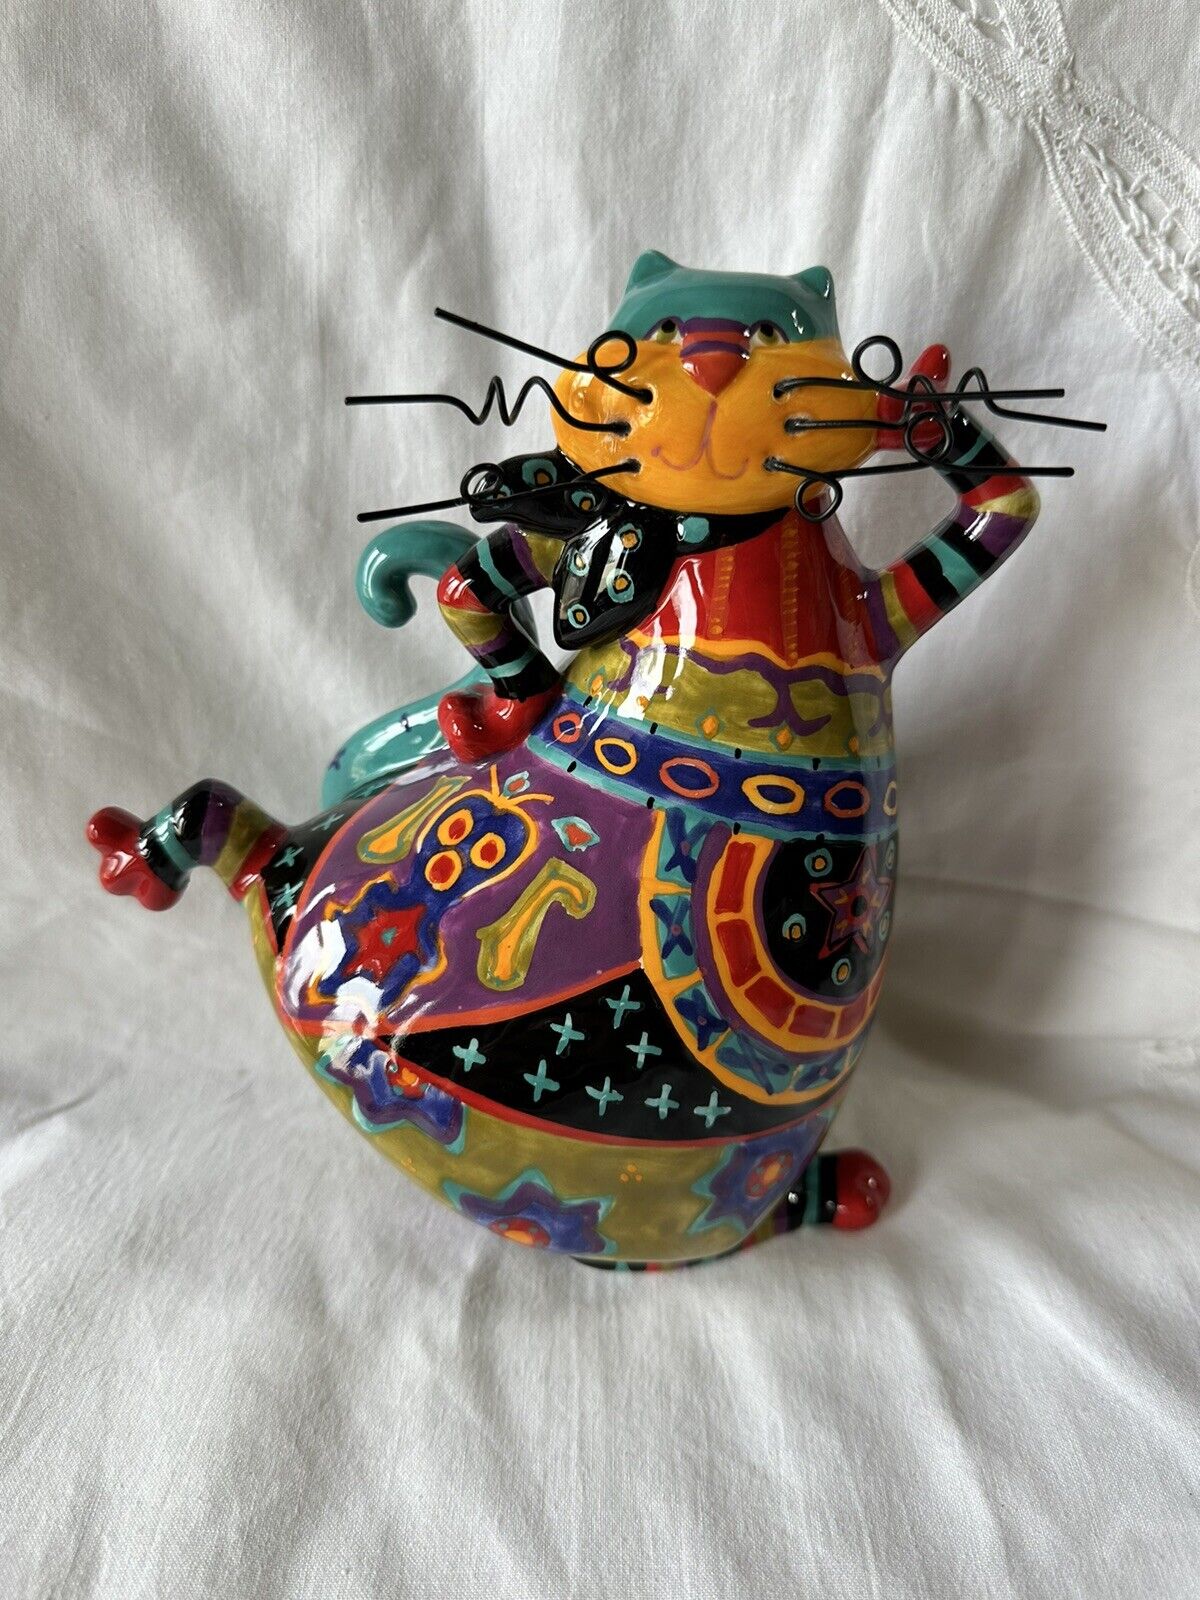 Catitudes Ceramic Figurine by Joyce Shelton: The Cats Meow